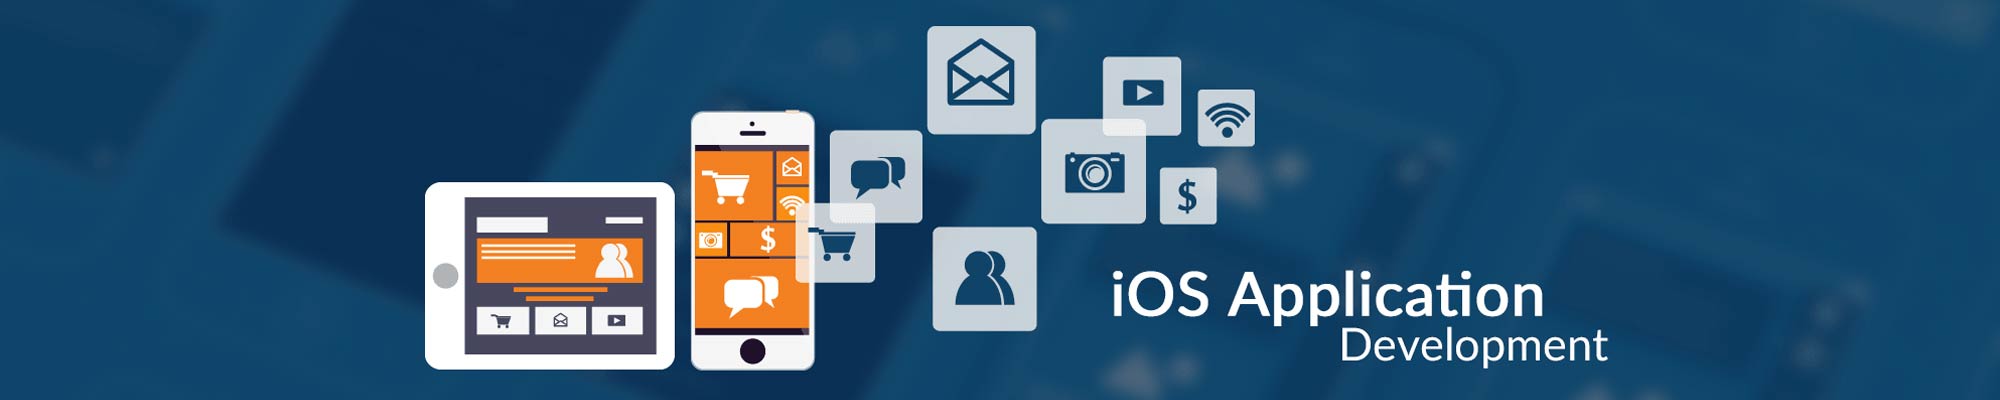 IOS Mobile Application Development